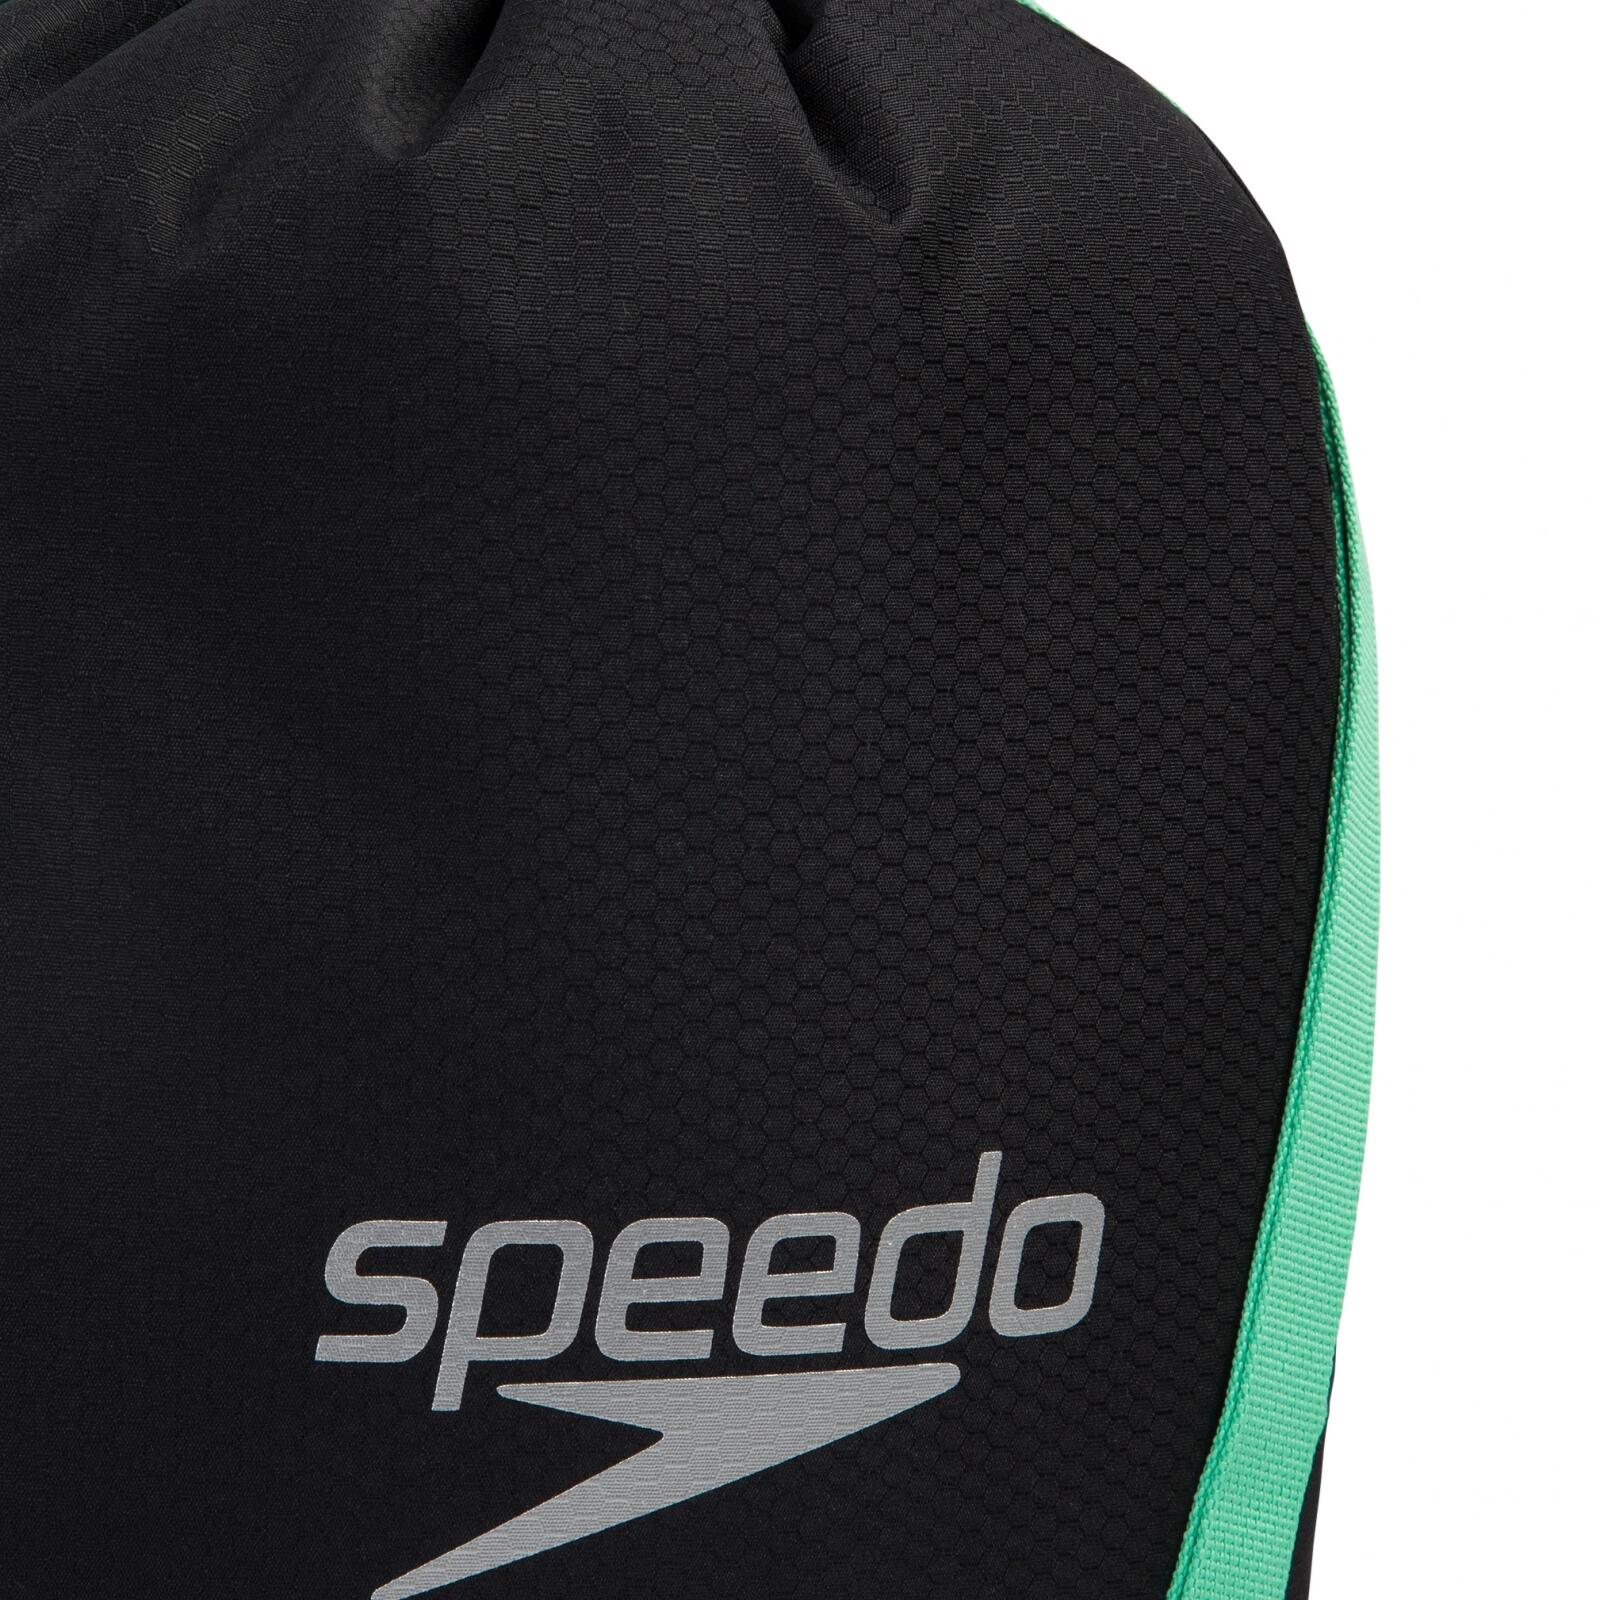 Speedo Pool Bag - Black / Green 4/4